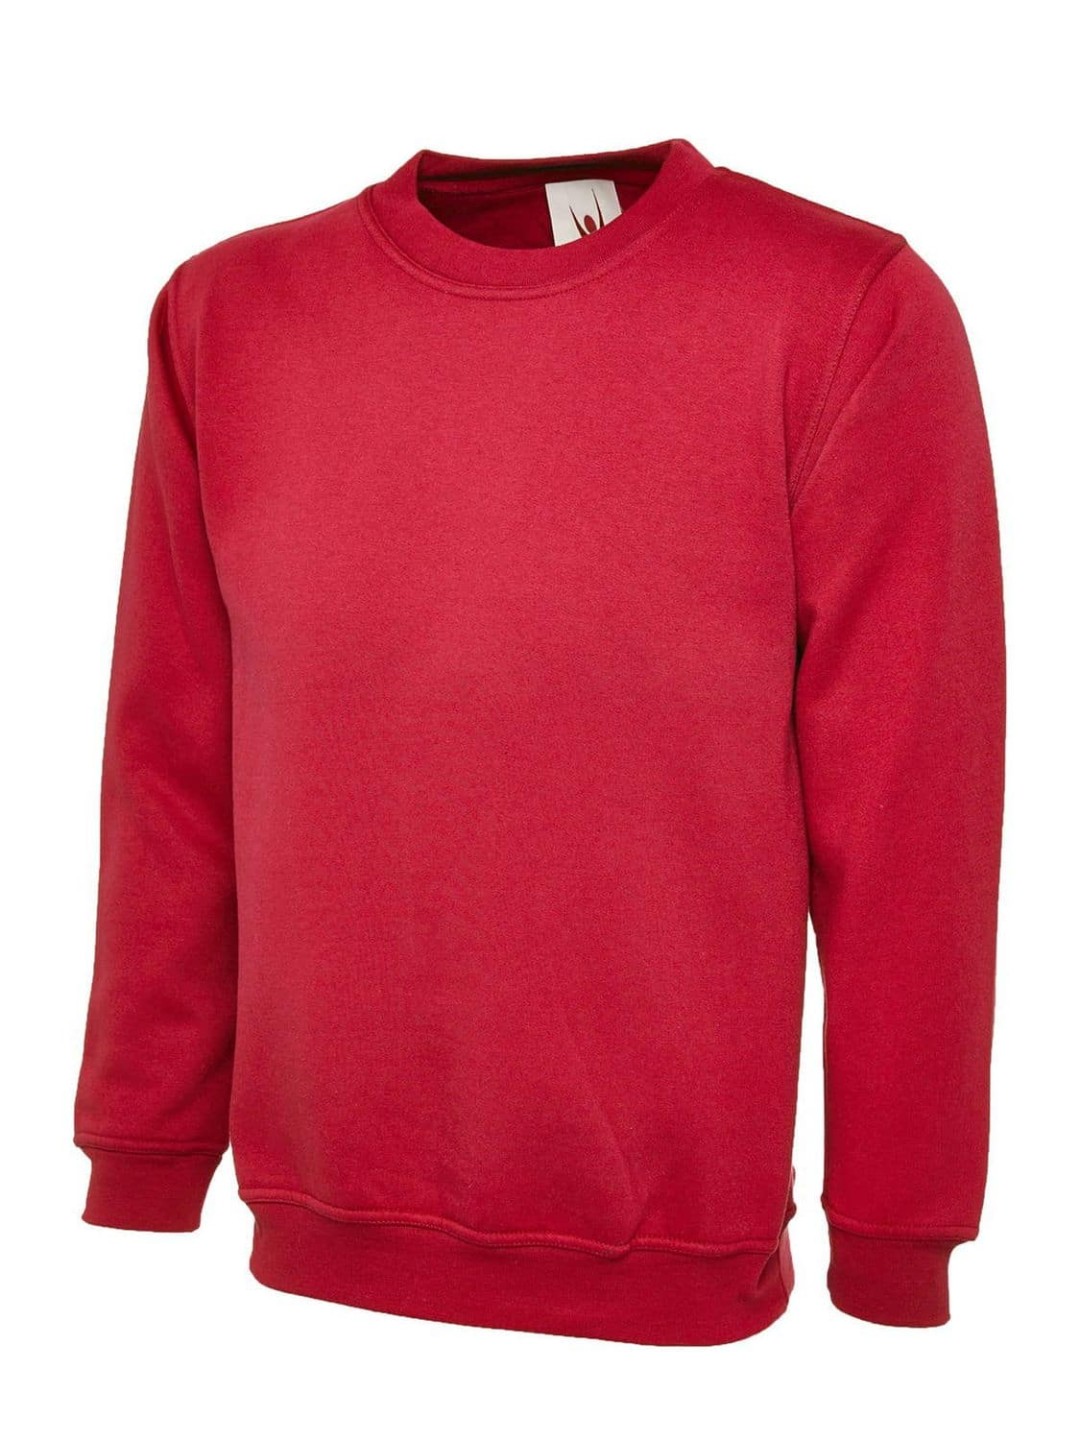 Uneek Premium Sweatshirt | Industrial Workwear